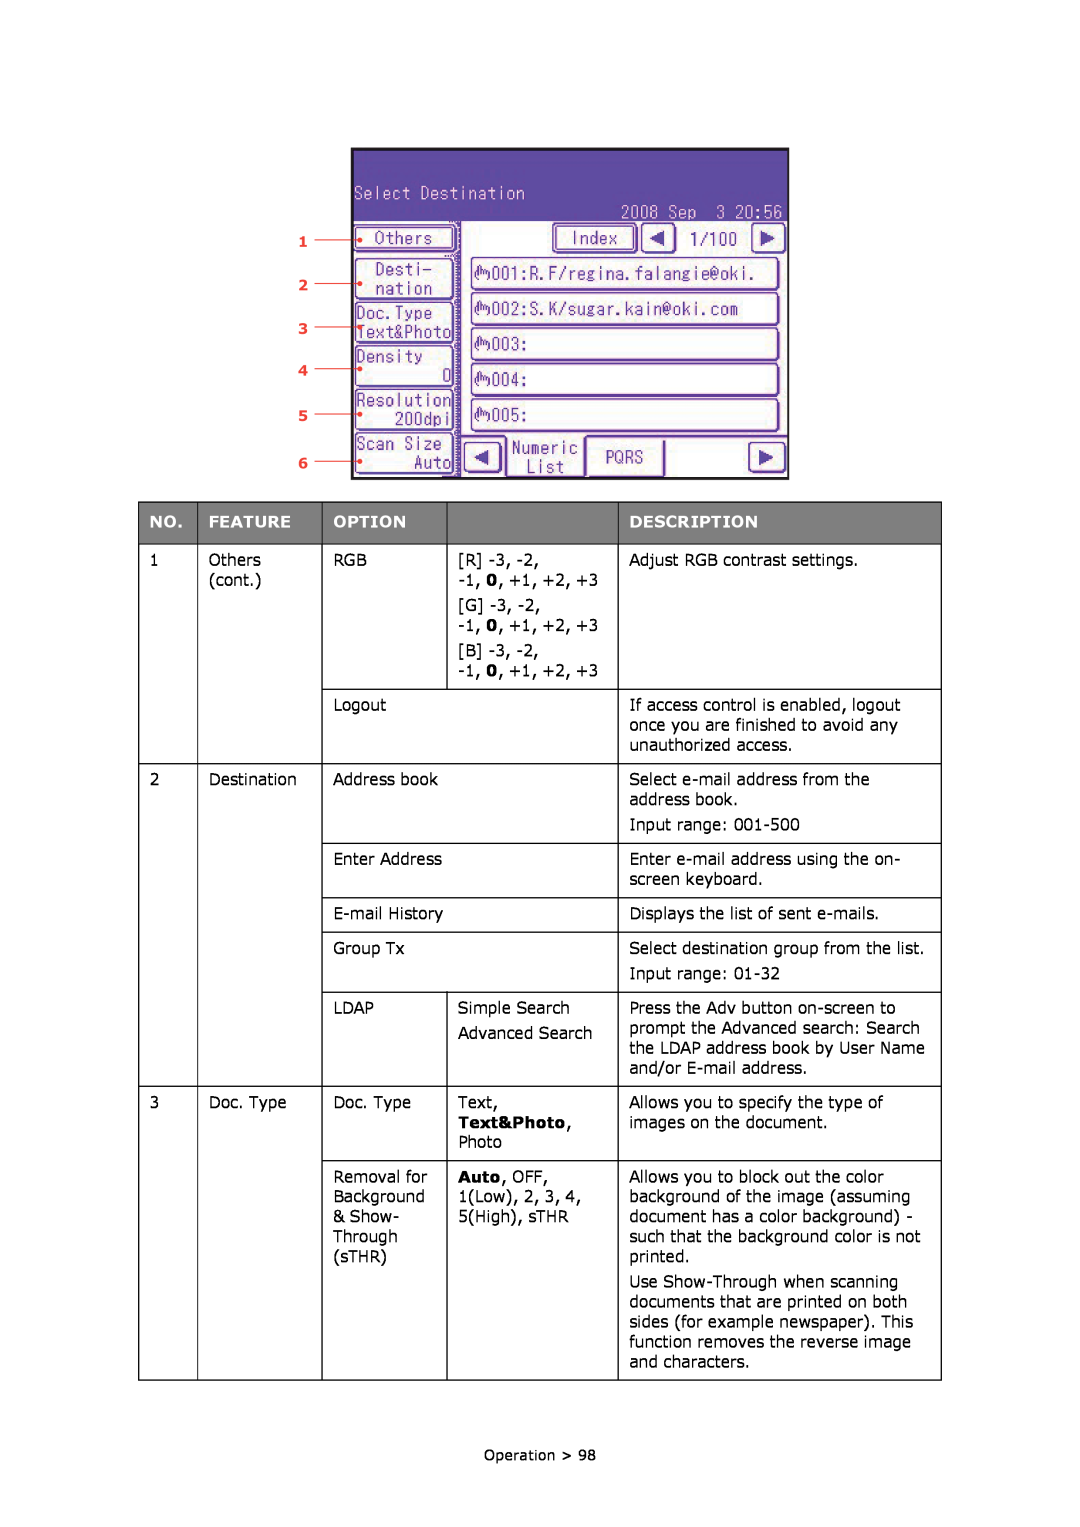 Oki MC860n MFP manual Feature, Option, Description, Text&Photo 